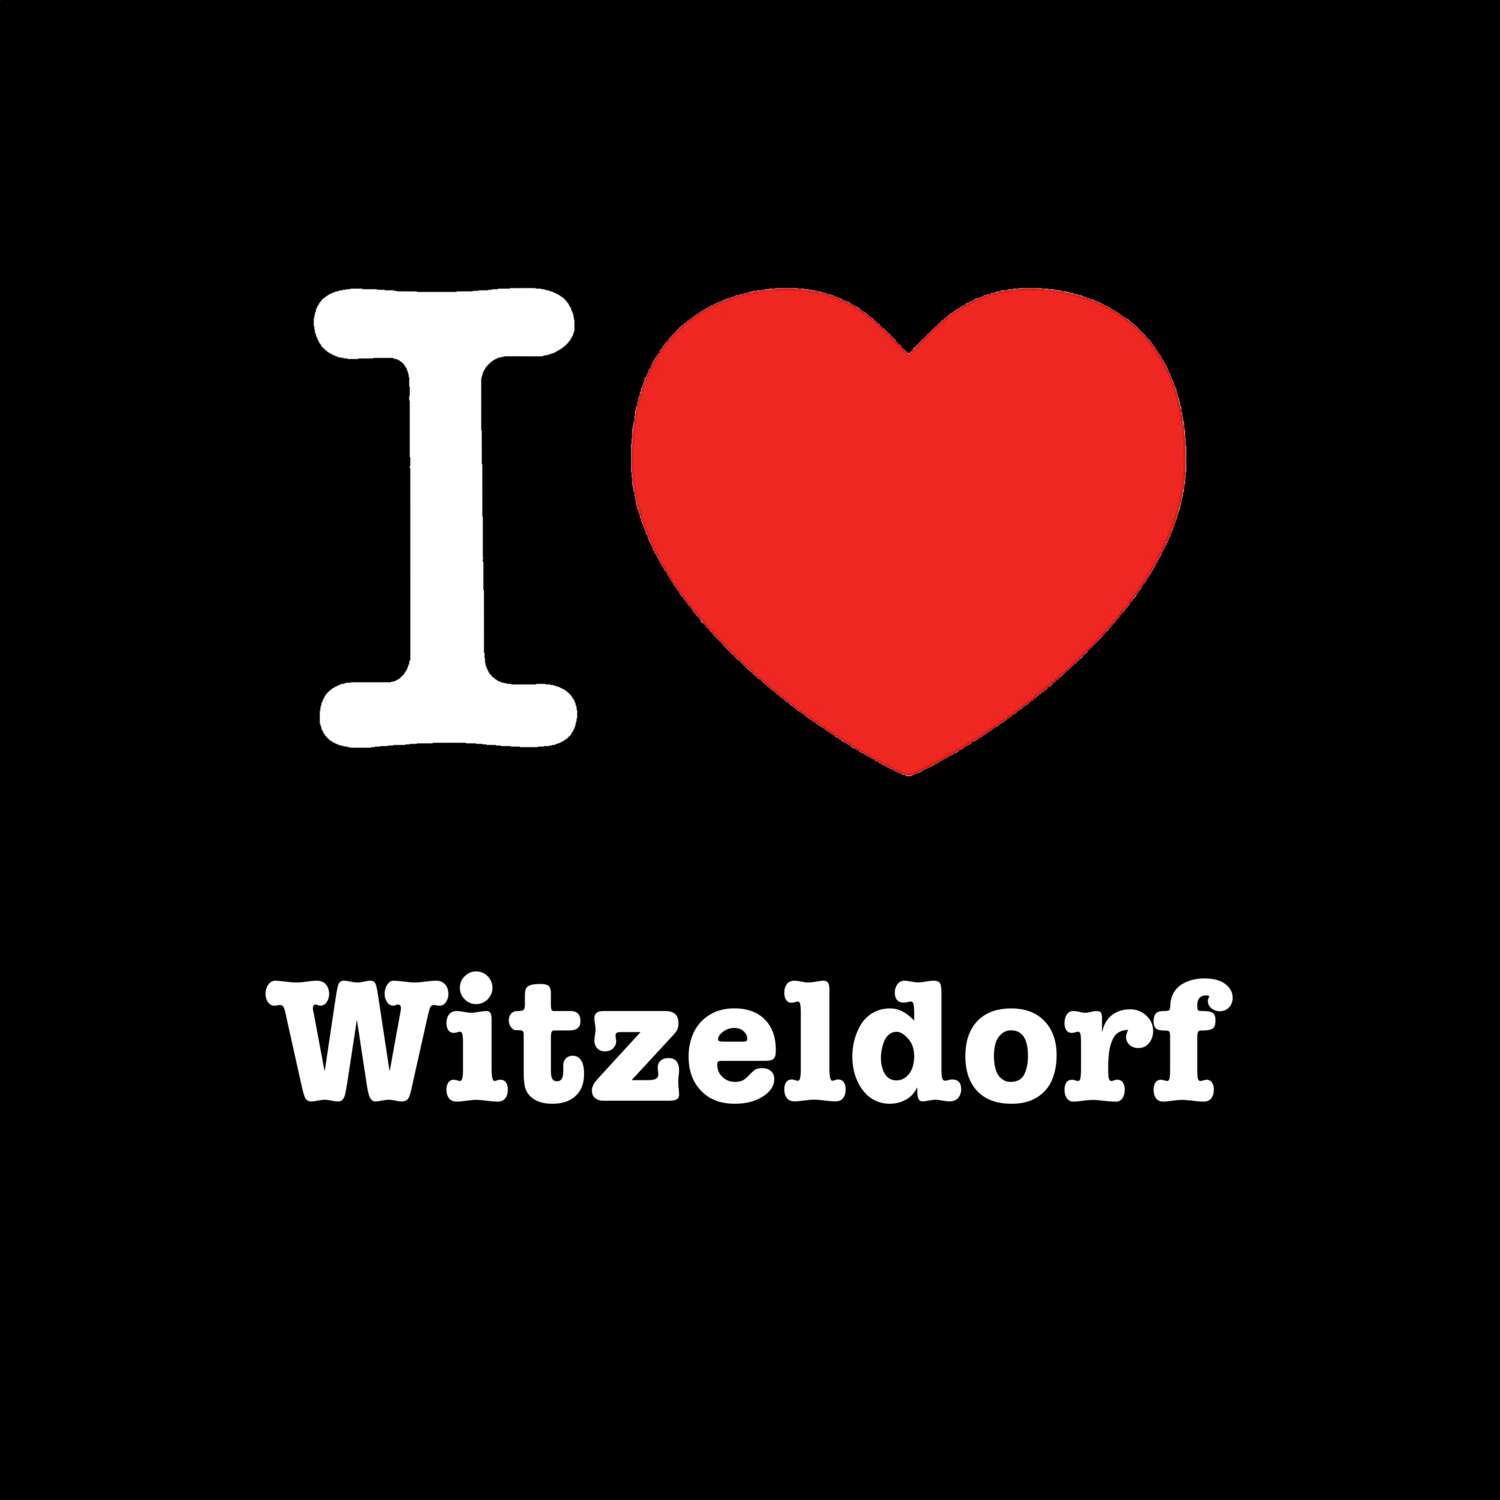 Witzeldorf T-Shirt »I love«